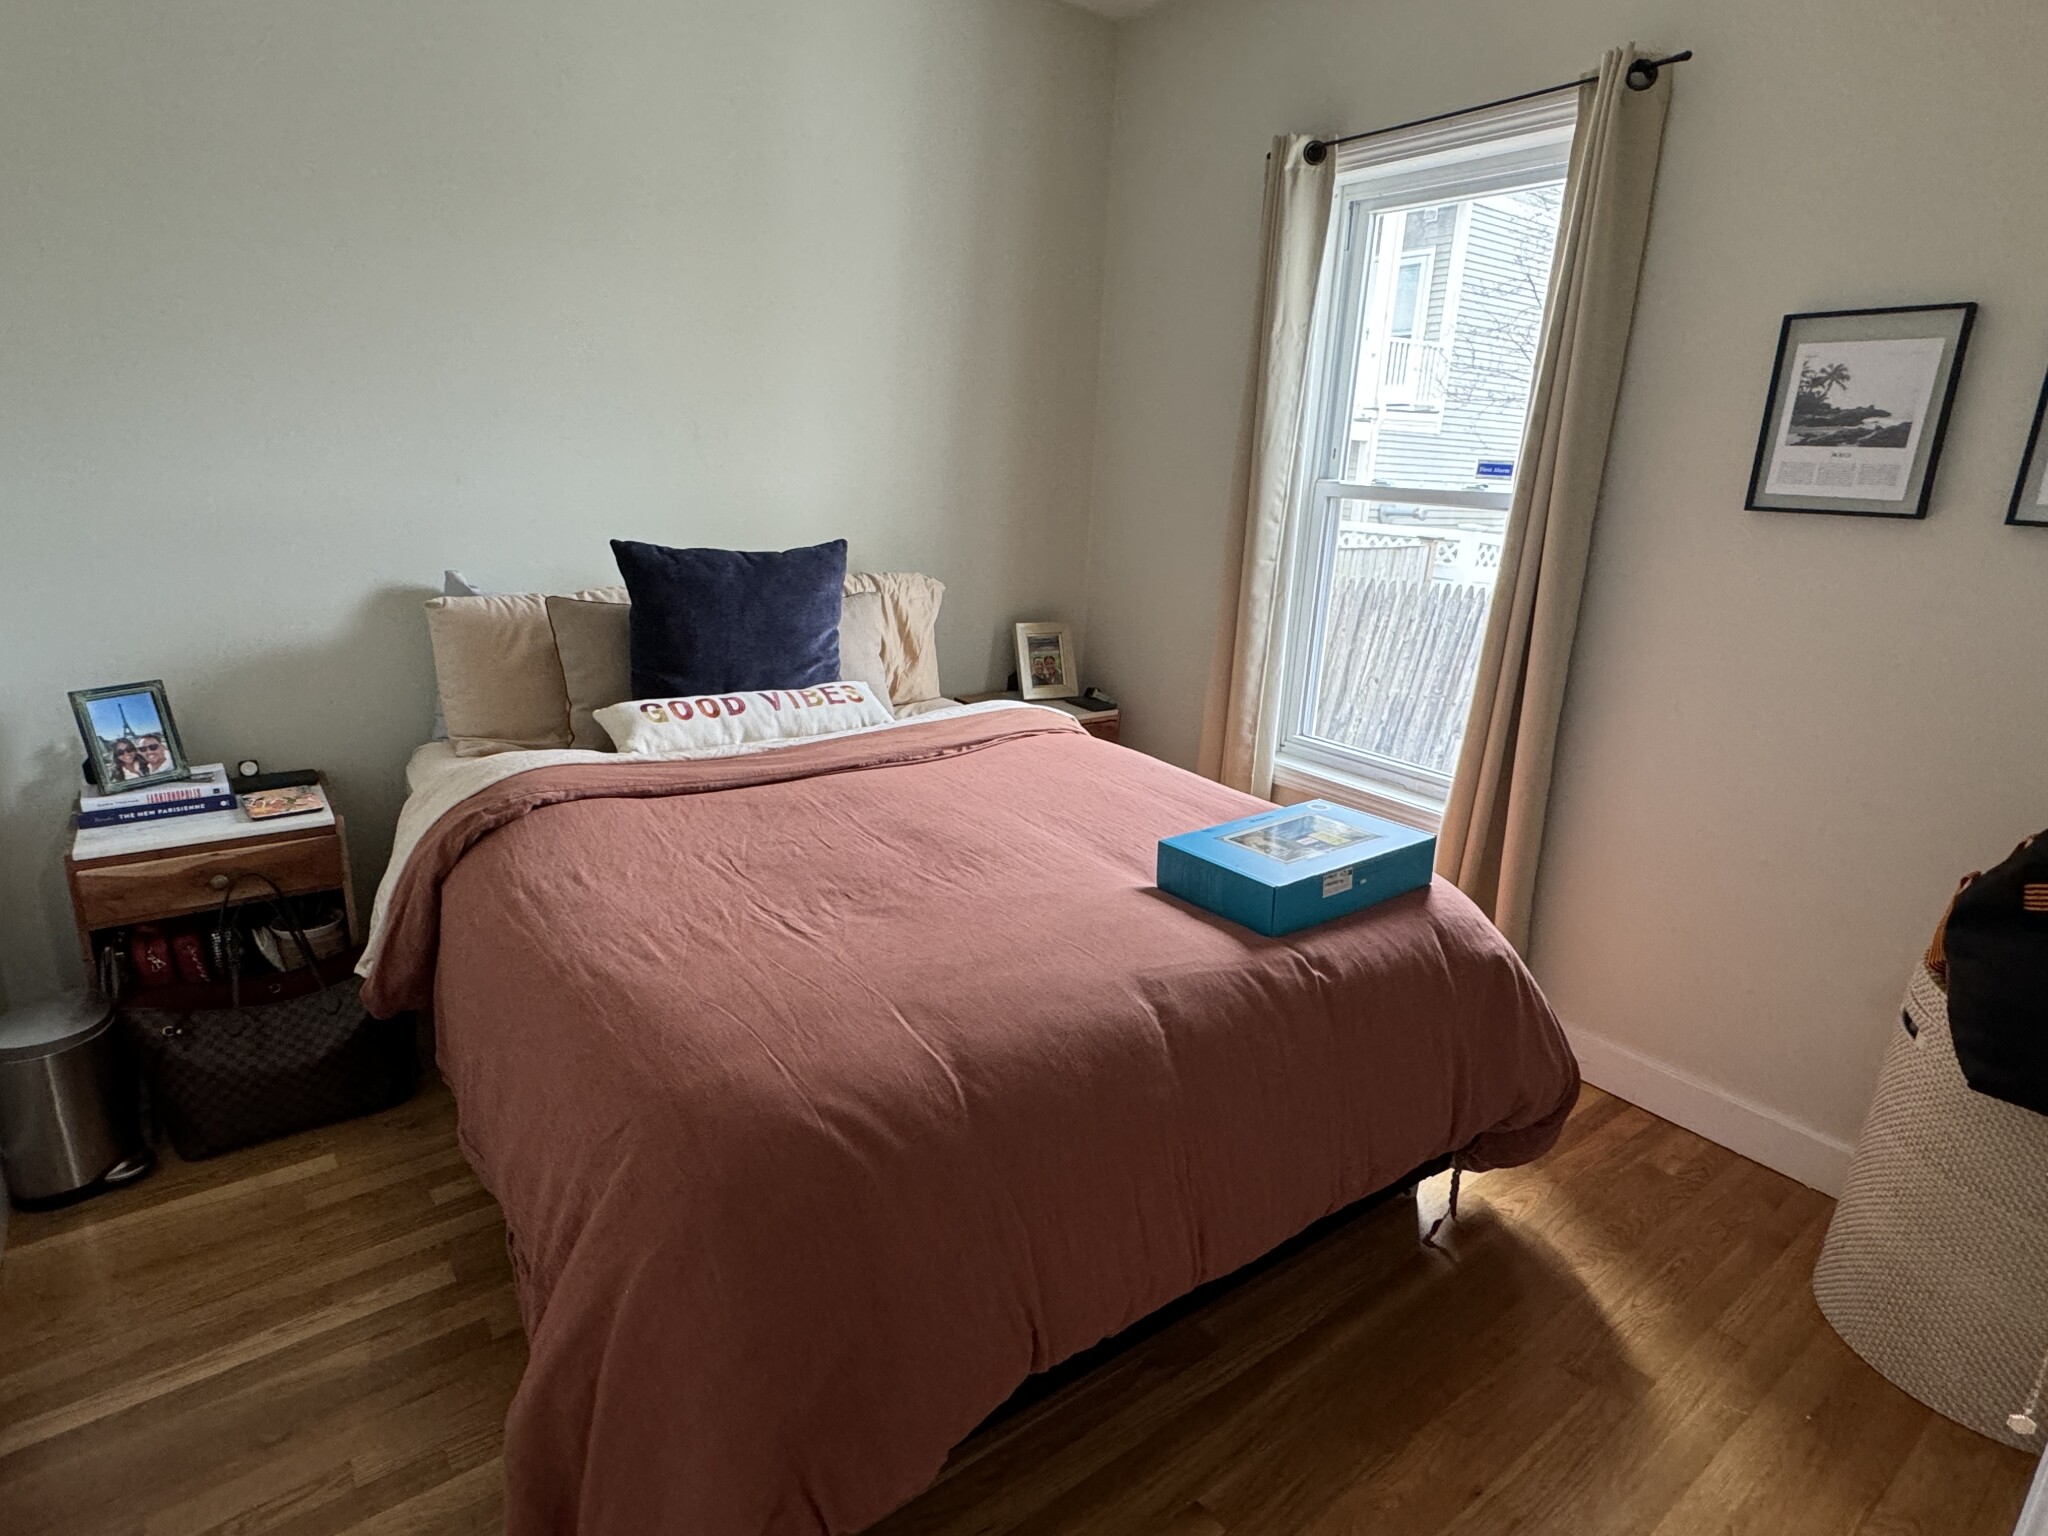 Photos of apartment on Bond St.,Somerville MA 02145